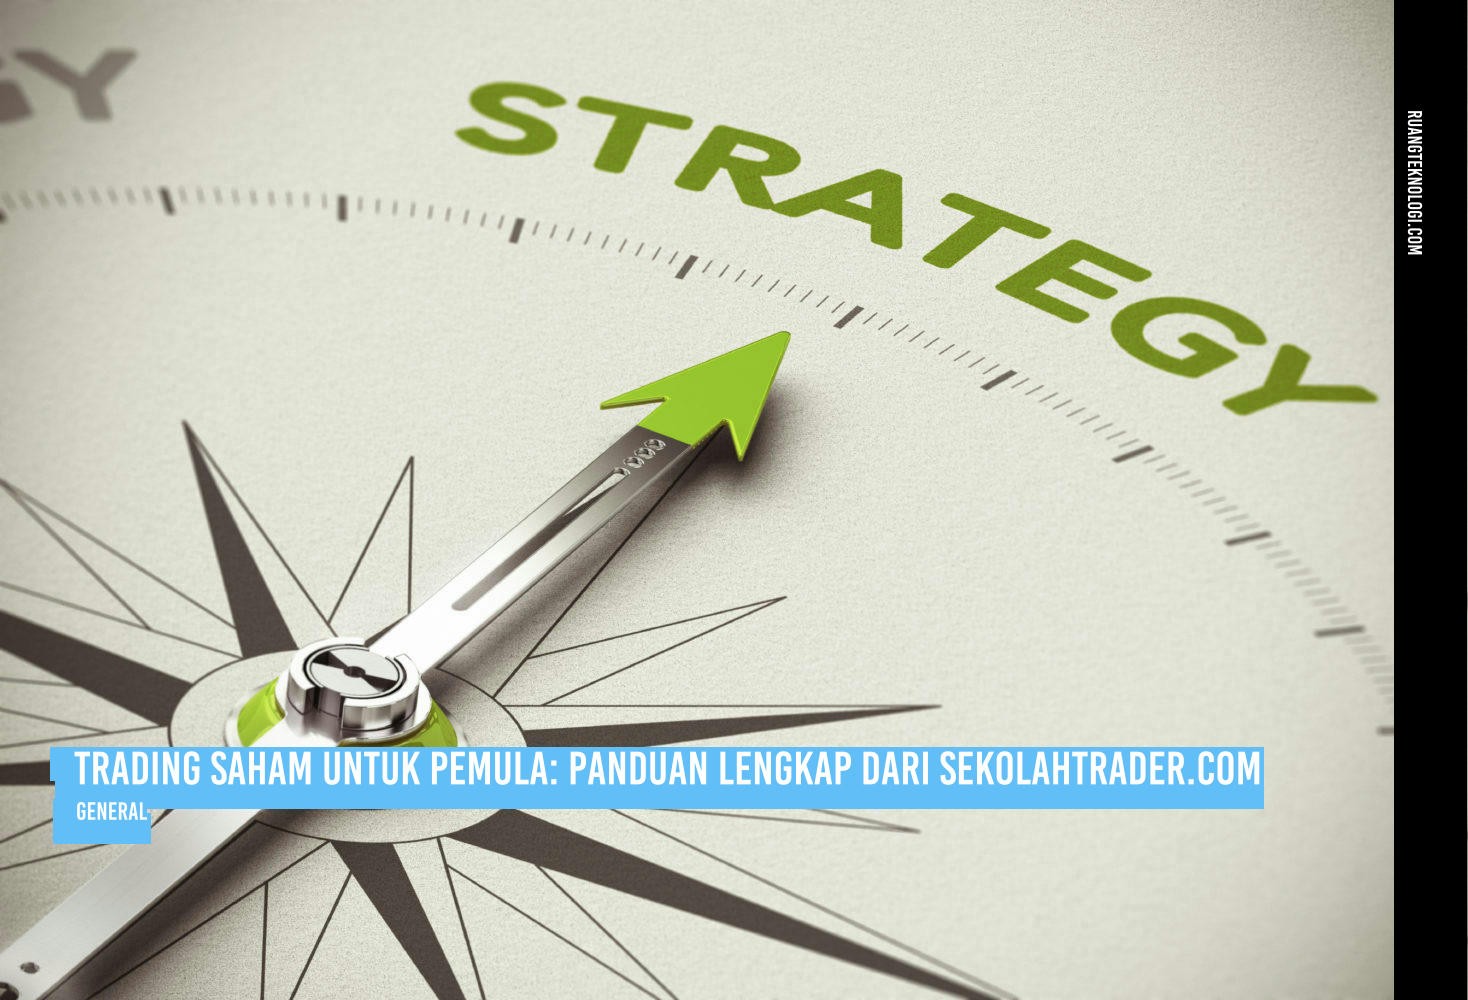 strategi